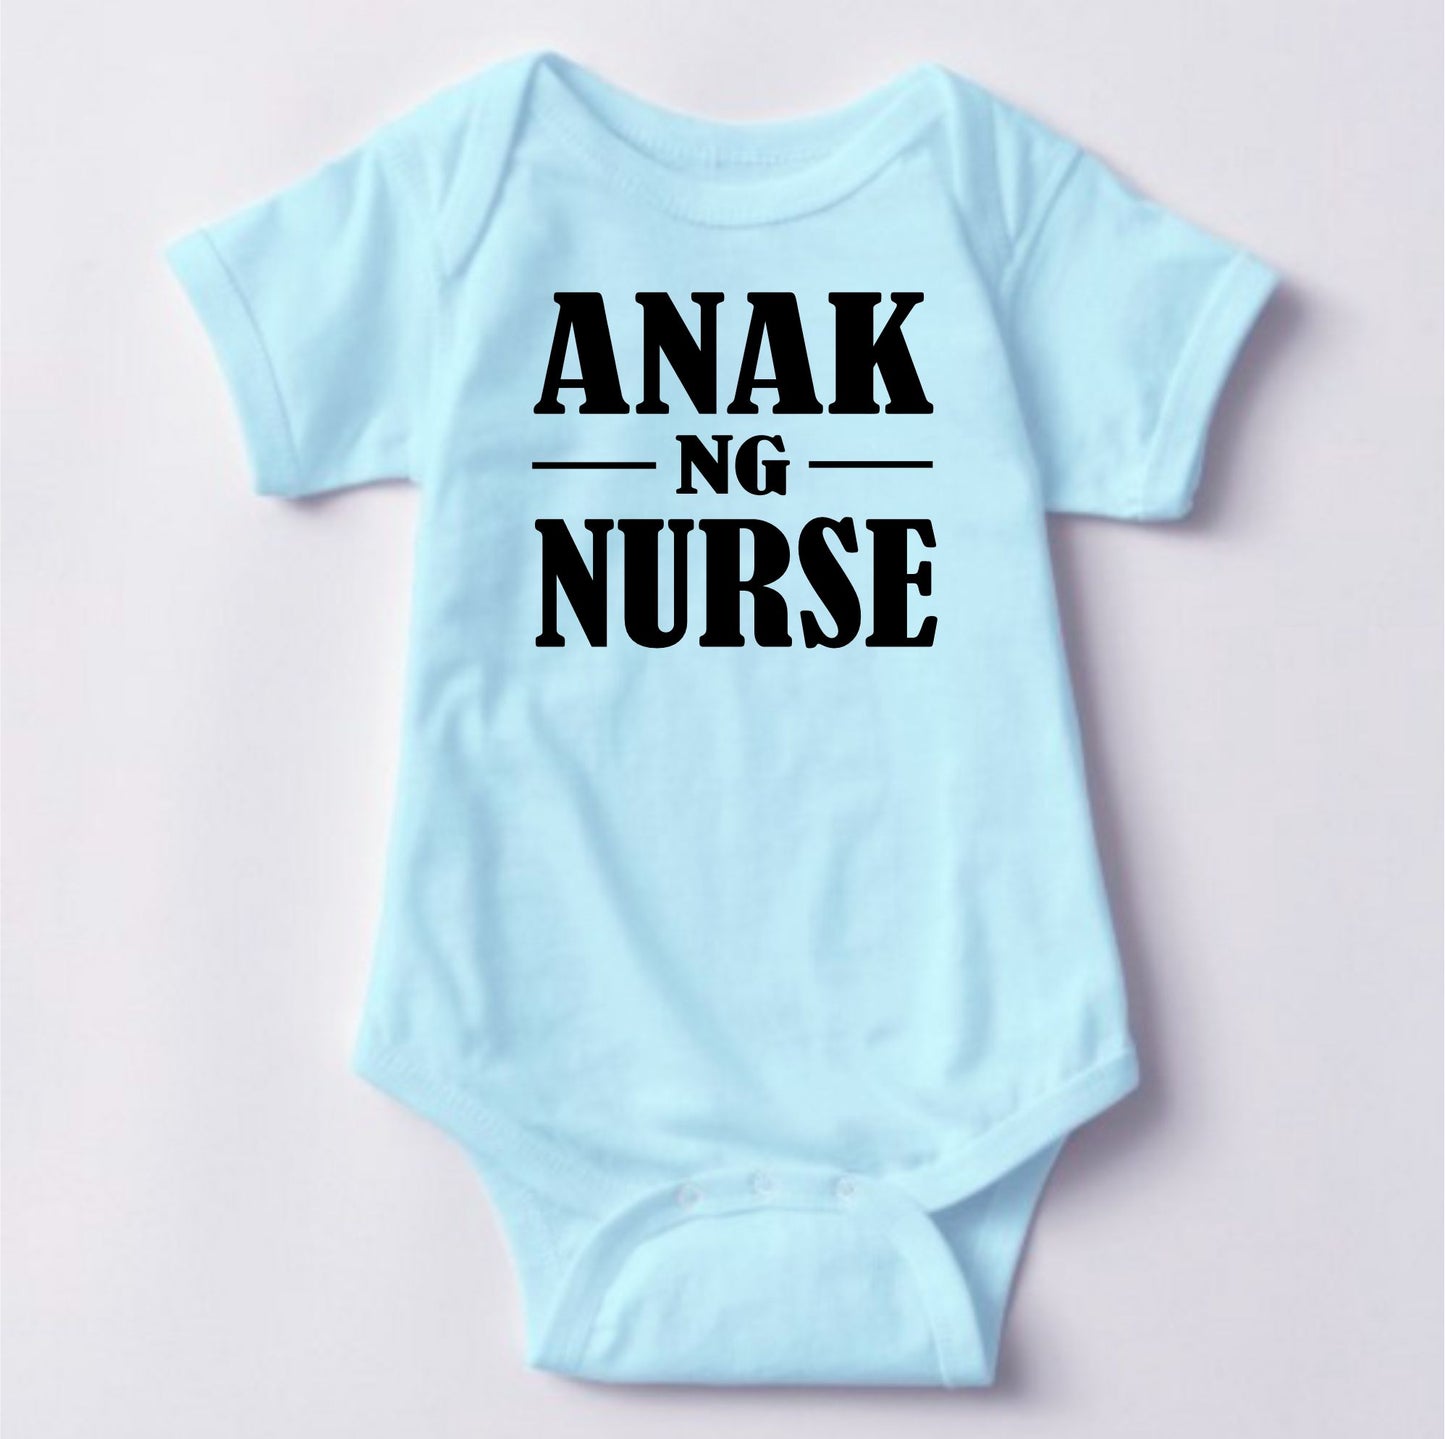 Baby Statement Onesies - Anak ng Nurse